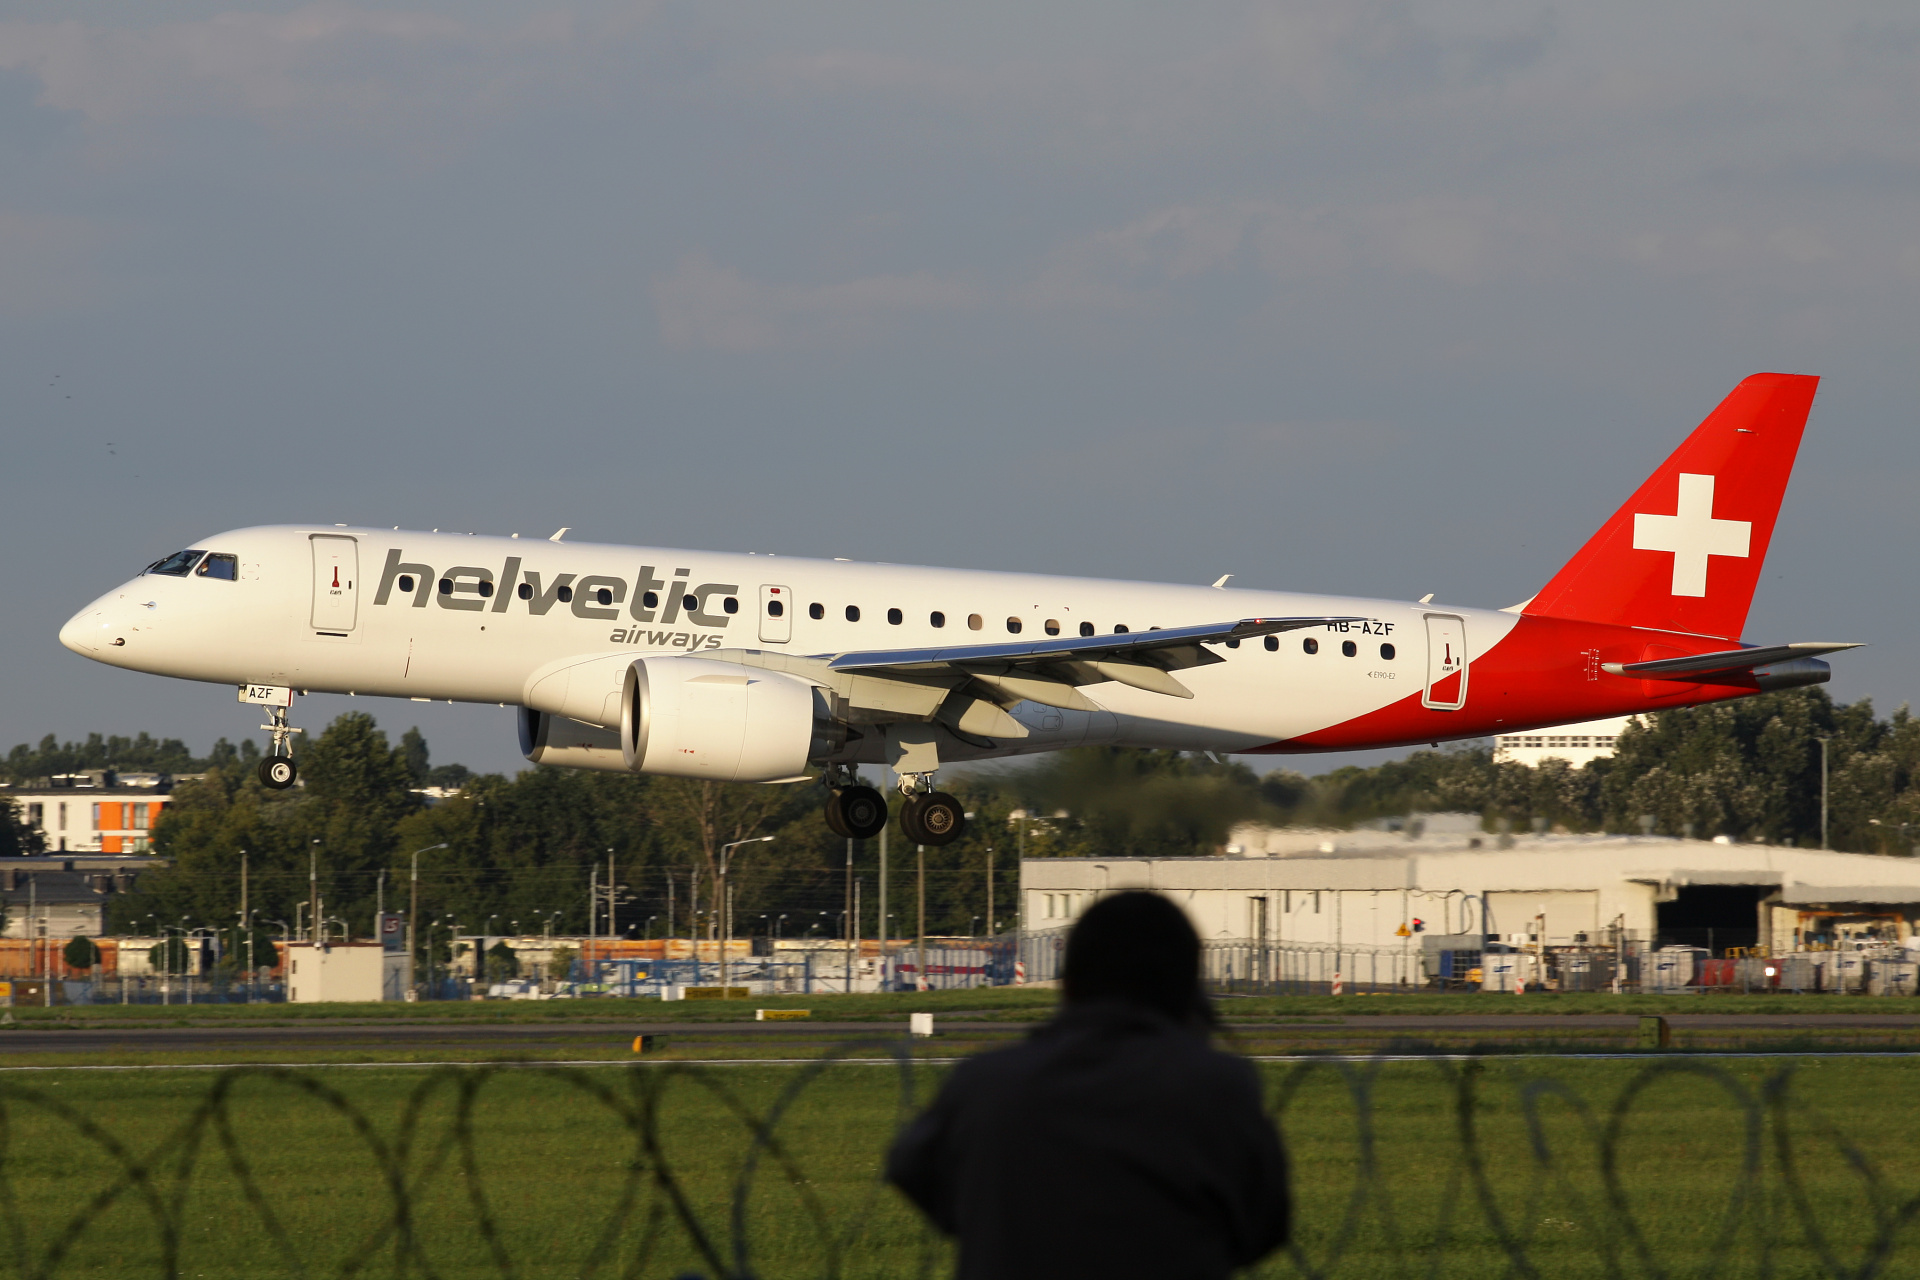 HB-AZF, Helvetic Airways (Samoloty » Spotting na EPWA » Embraer E190-E2)